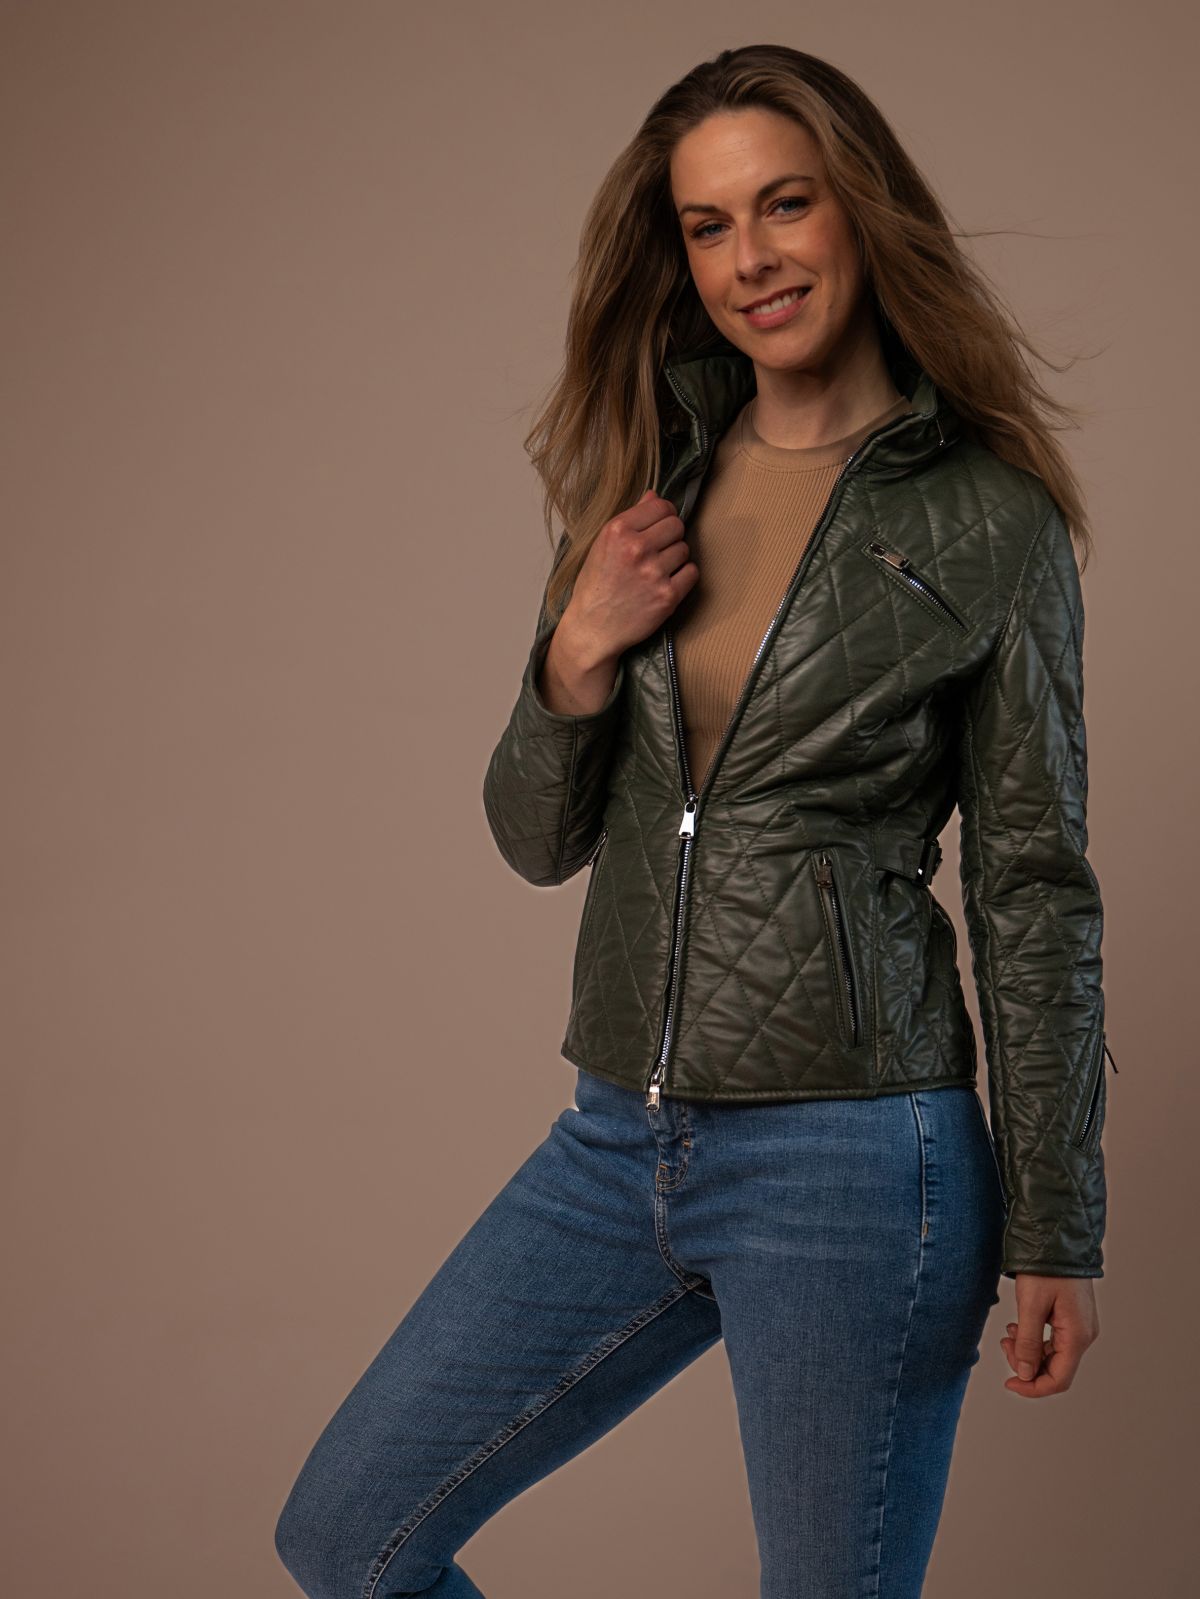 Virginia Ladies € Leather Jacket, Quilted 2.499,00